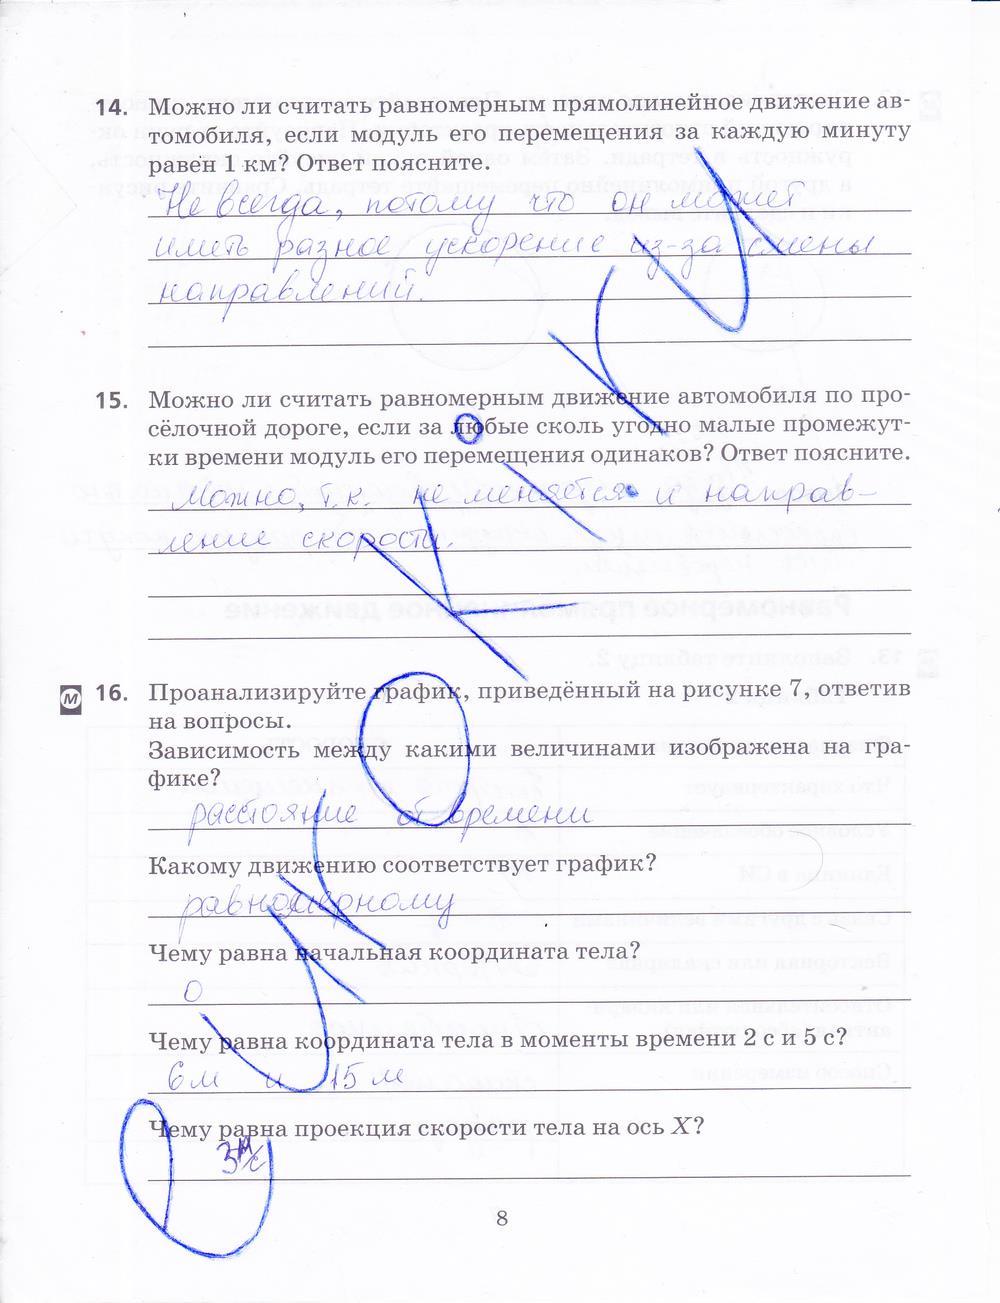 гдз 9 класс рабочая тетрадь страница 8 физика Пурышева, Важеевская, Чаругин